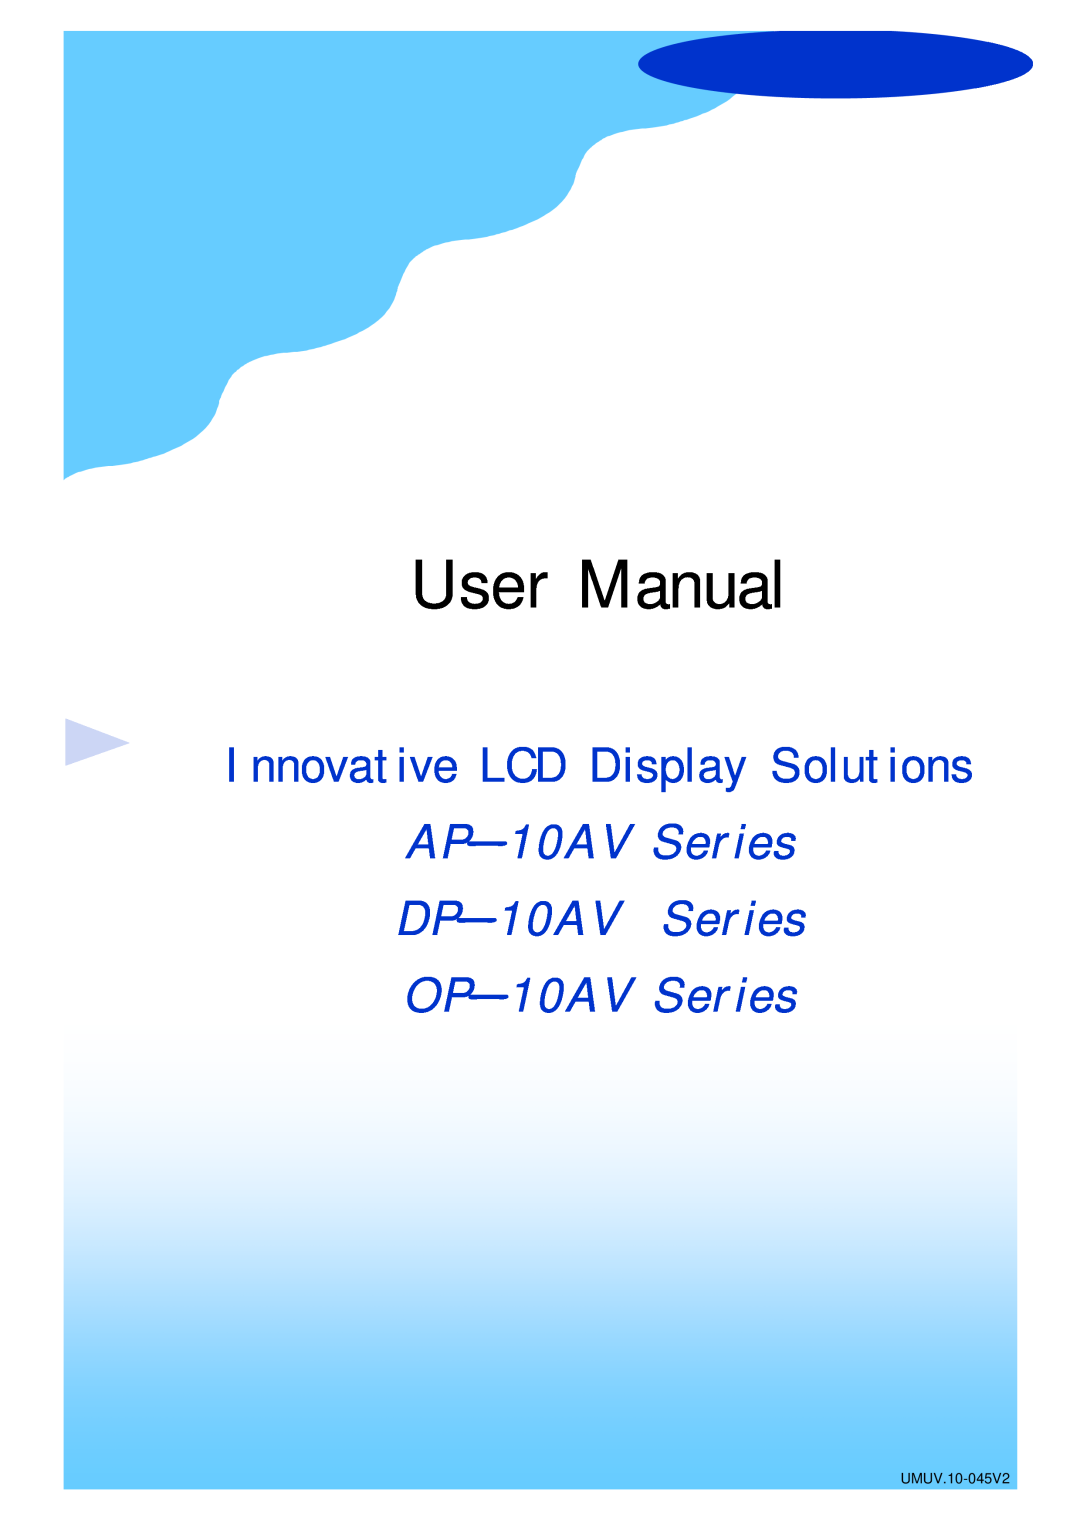 3M UMUV.10-045V2 user manual User Manual, Innovative LCD Display Solutions, AP-10AV Series DP-10AV Series OP-10AV Series 